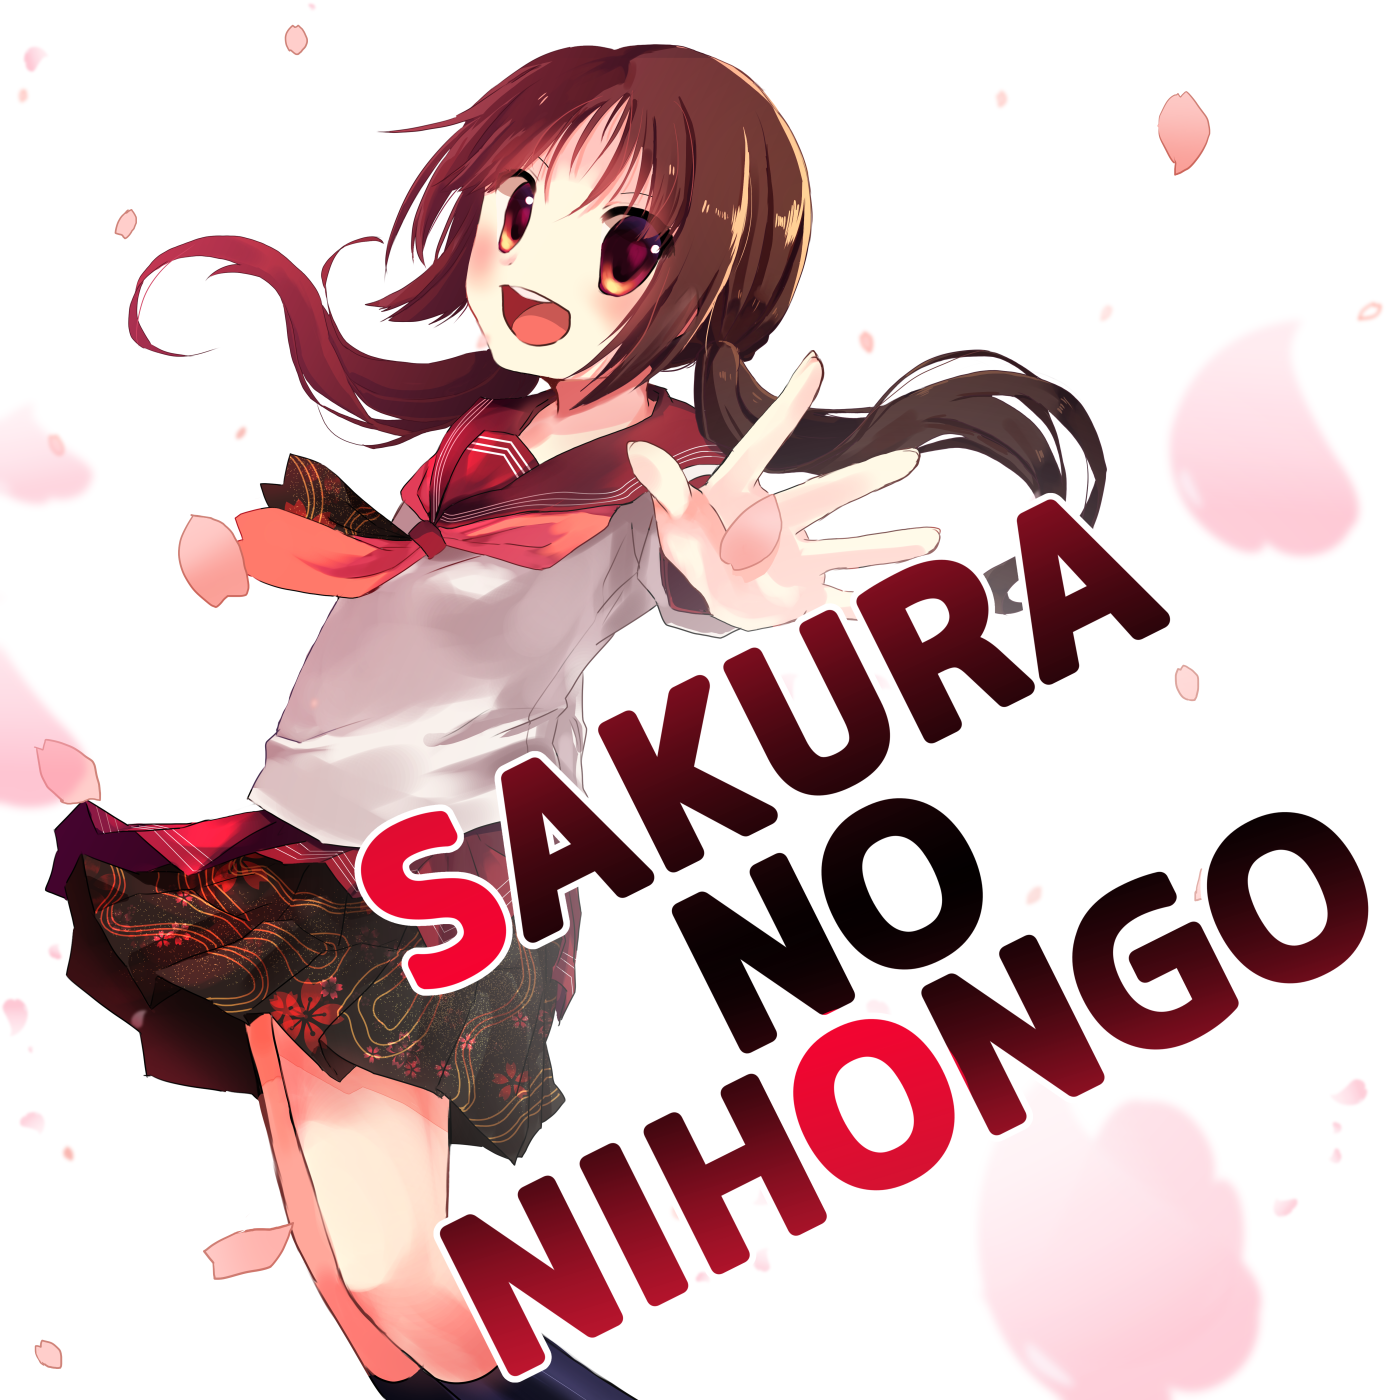 Sakura no Nihongo (Japanese Lesson)